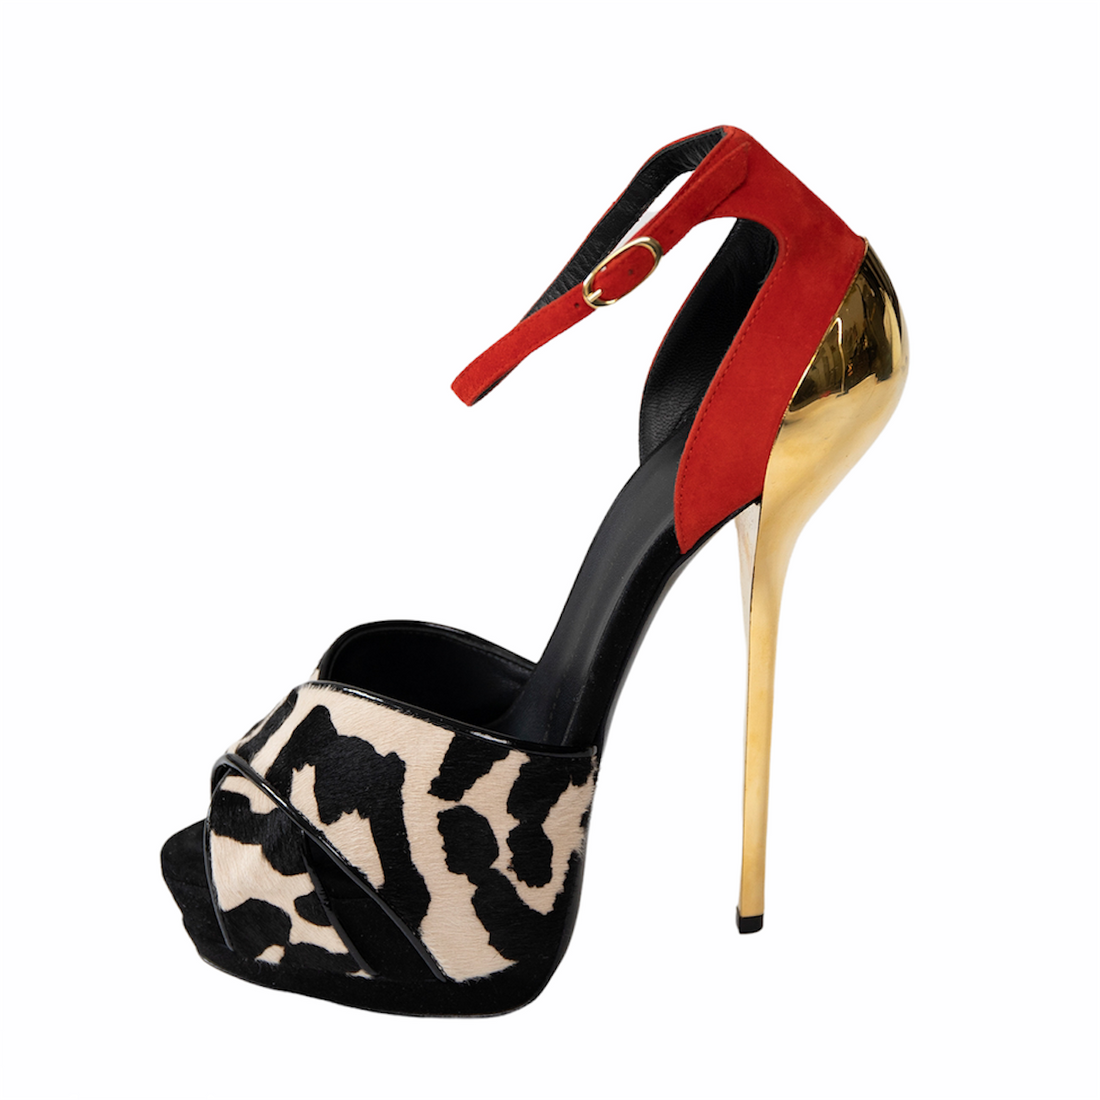 Giuseppe Zanotti high heels with leopard print made of pony fur-150